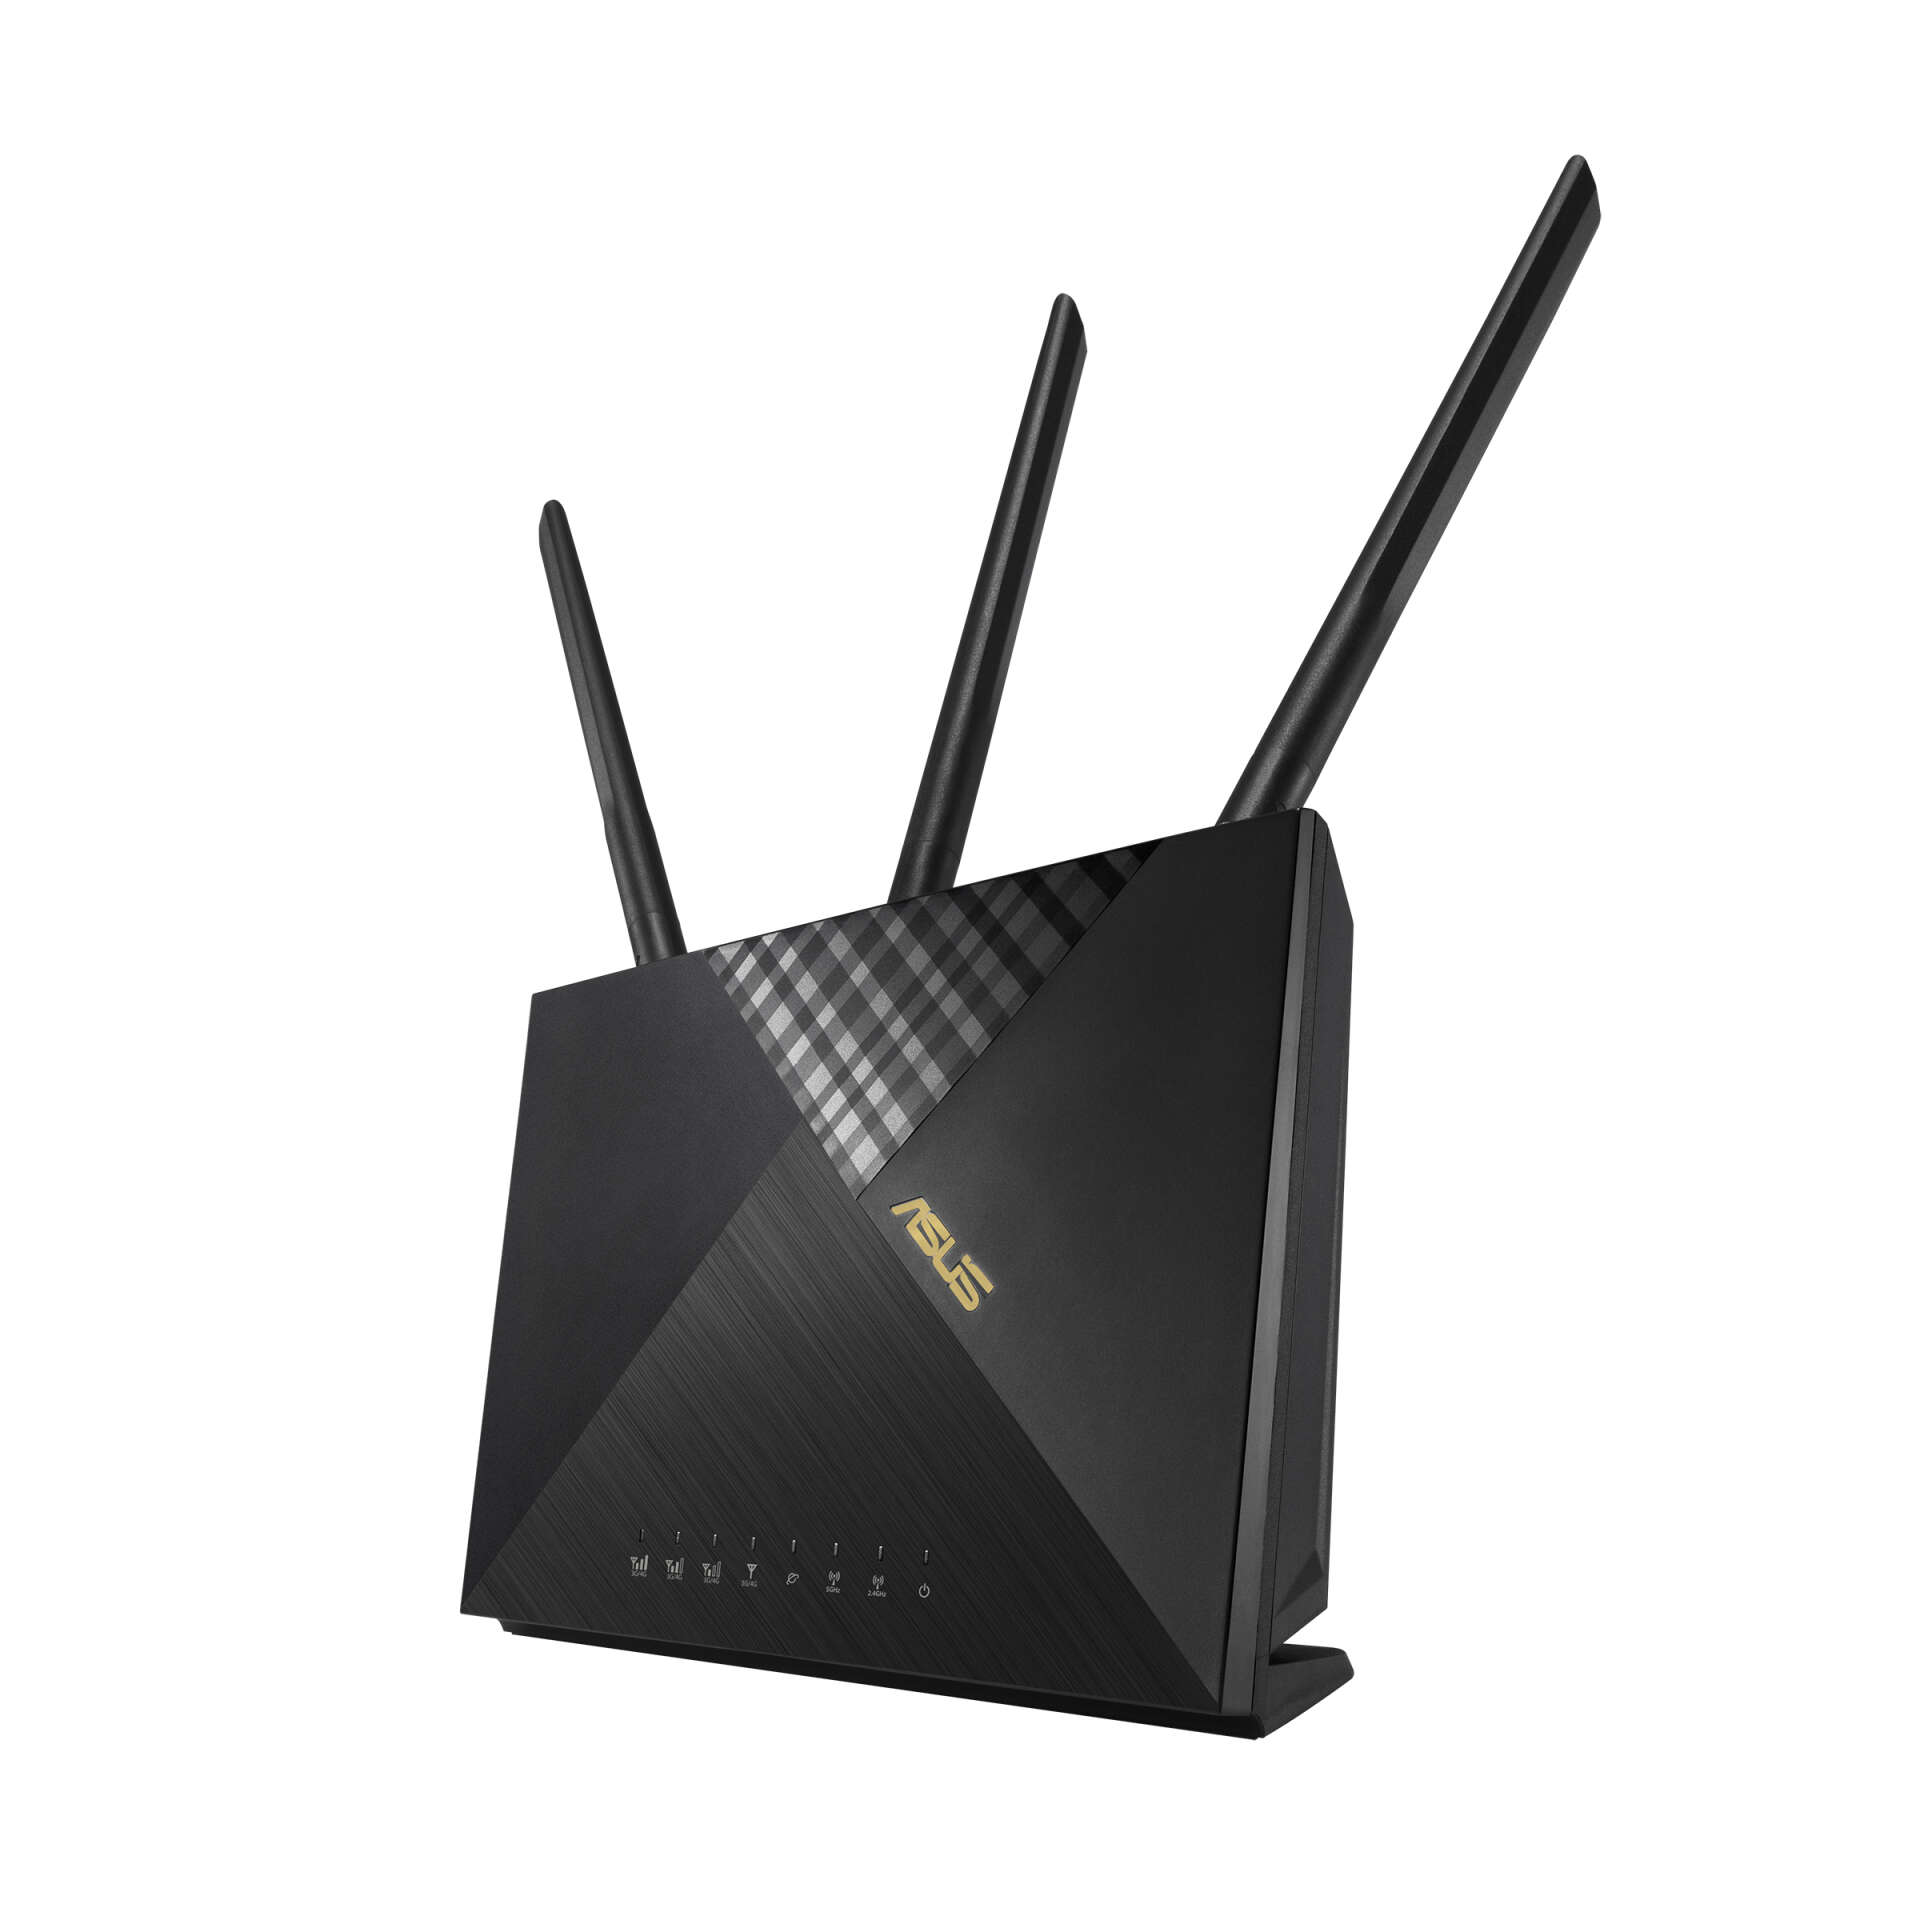 Asus 4g-ax56 4g modem + wireless router dual band ax1800 1xwan(10...